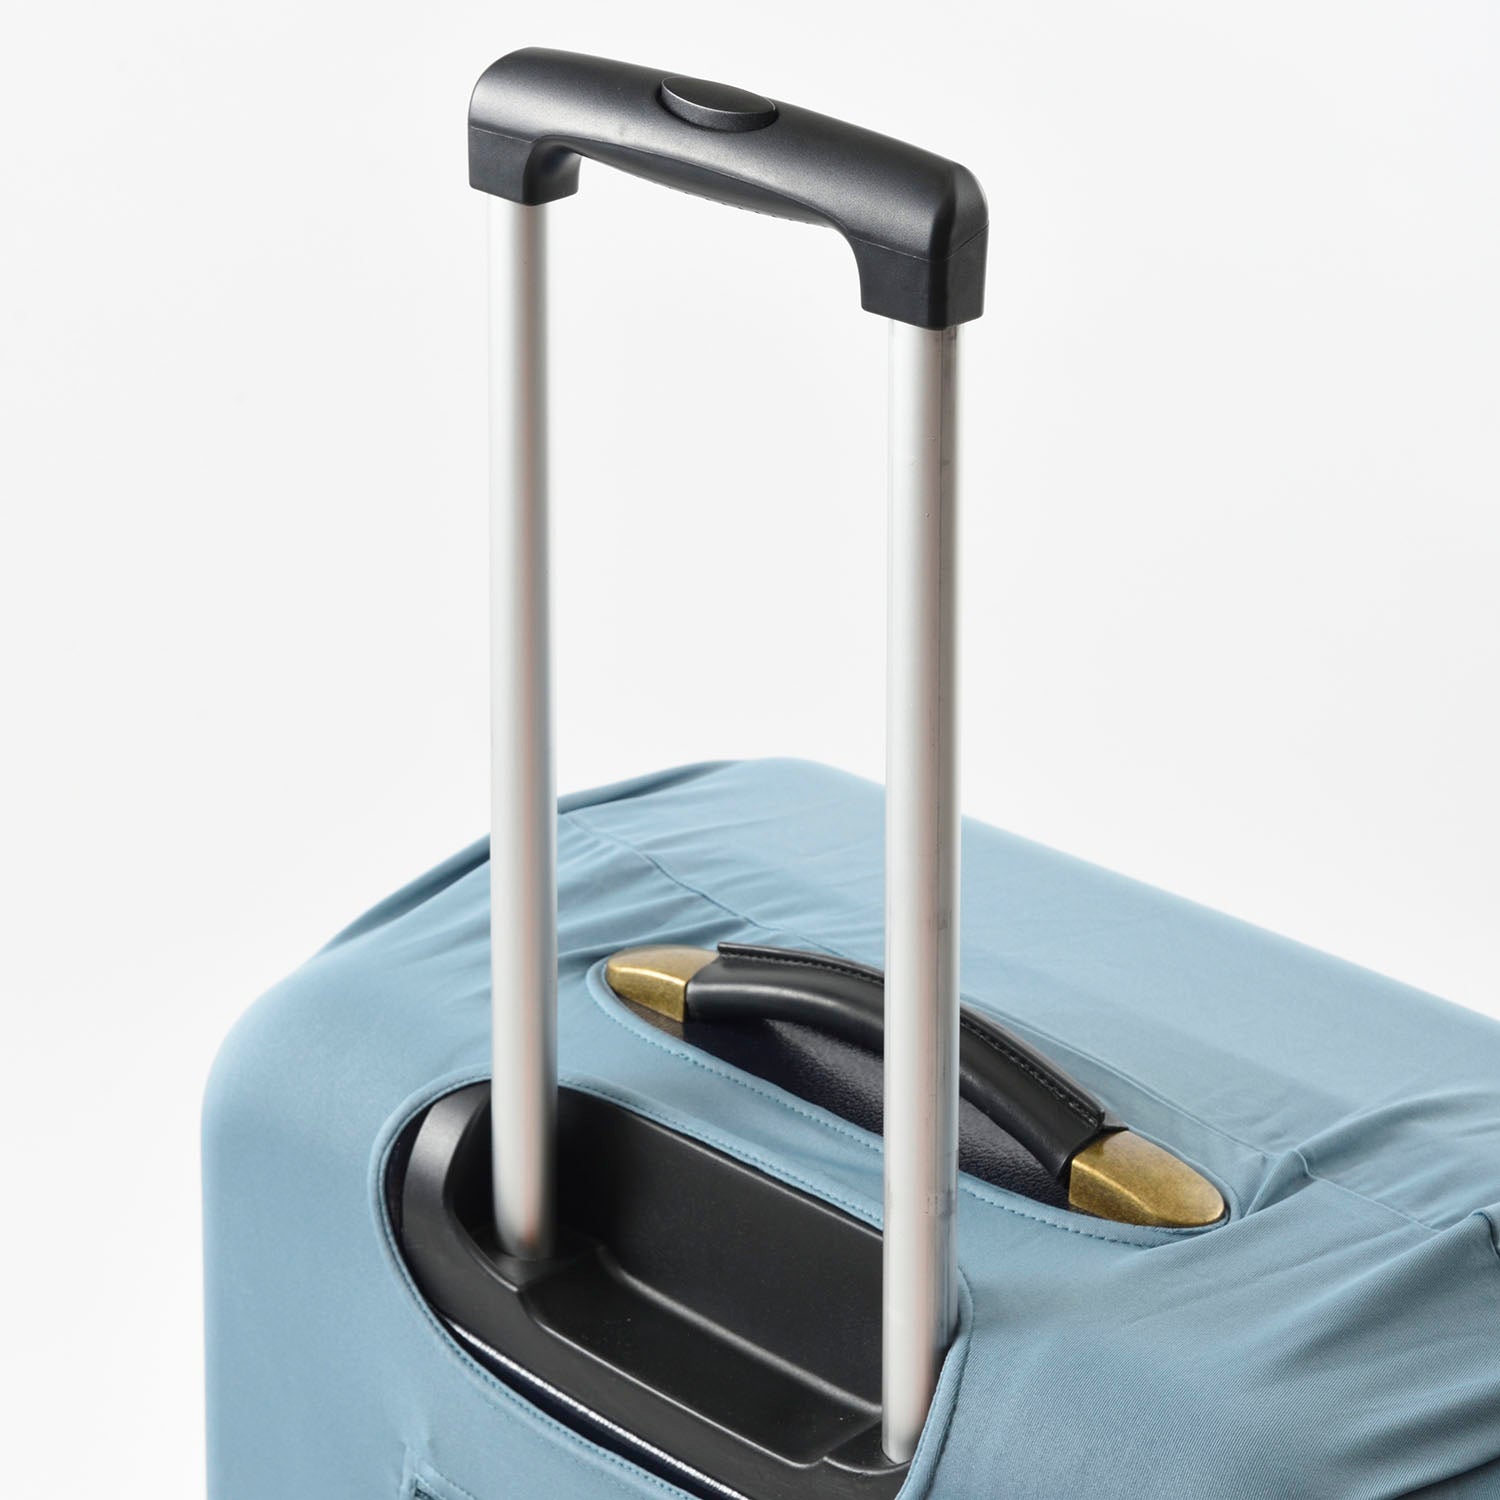 MILESTO UTILITY 可清洗式行李箱保護套 L - 灰藍色 MLS611-BLGY